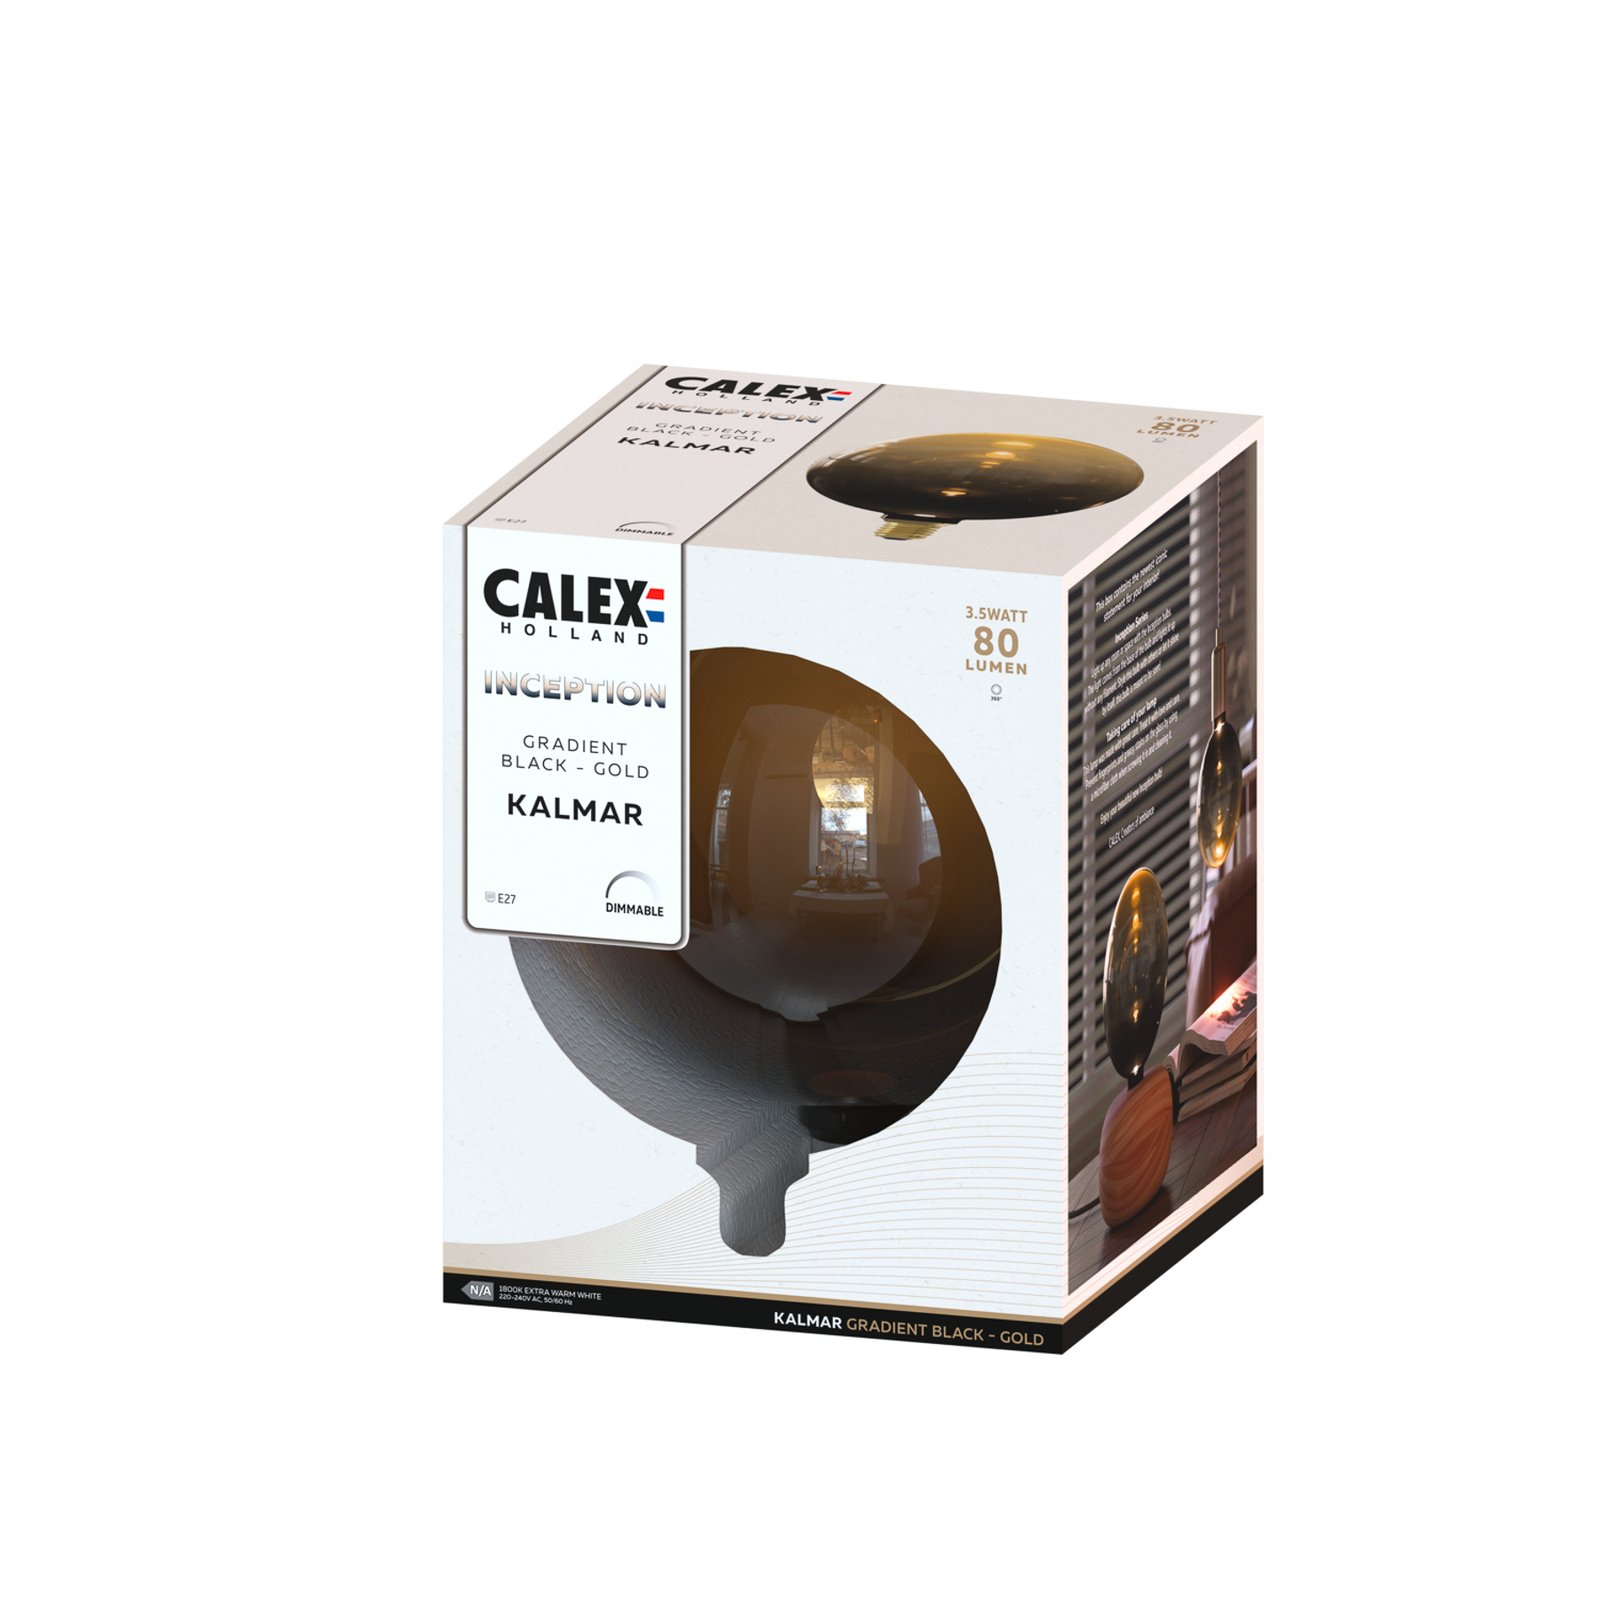 Calex Inception LED gloobus E27 G200 3W 1,800K dimm